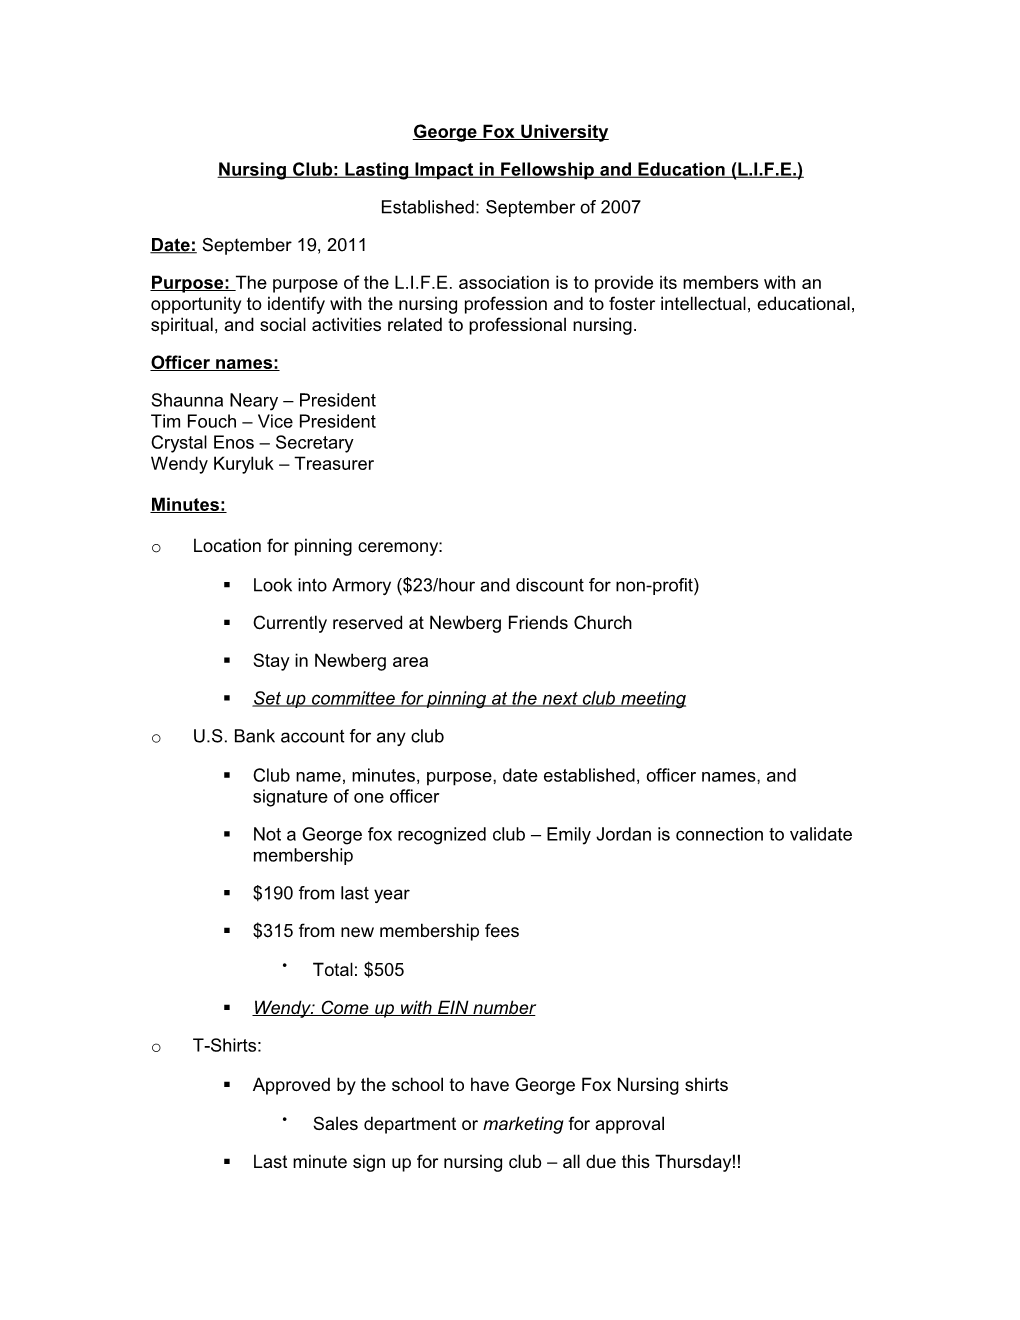 Nursing Club: Lasting Impact in Fellowship and Education (L.I.F.E.)